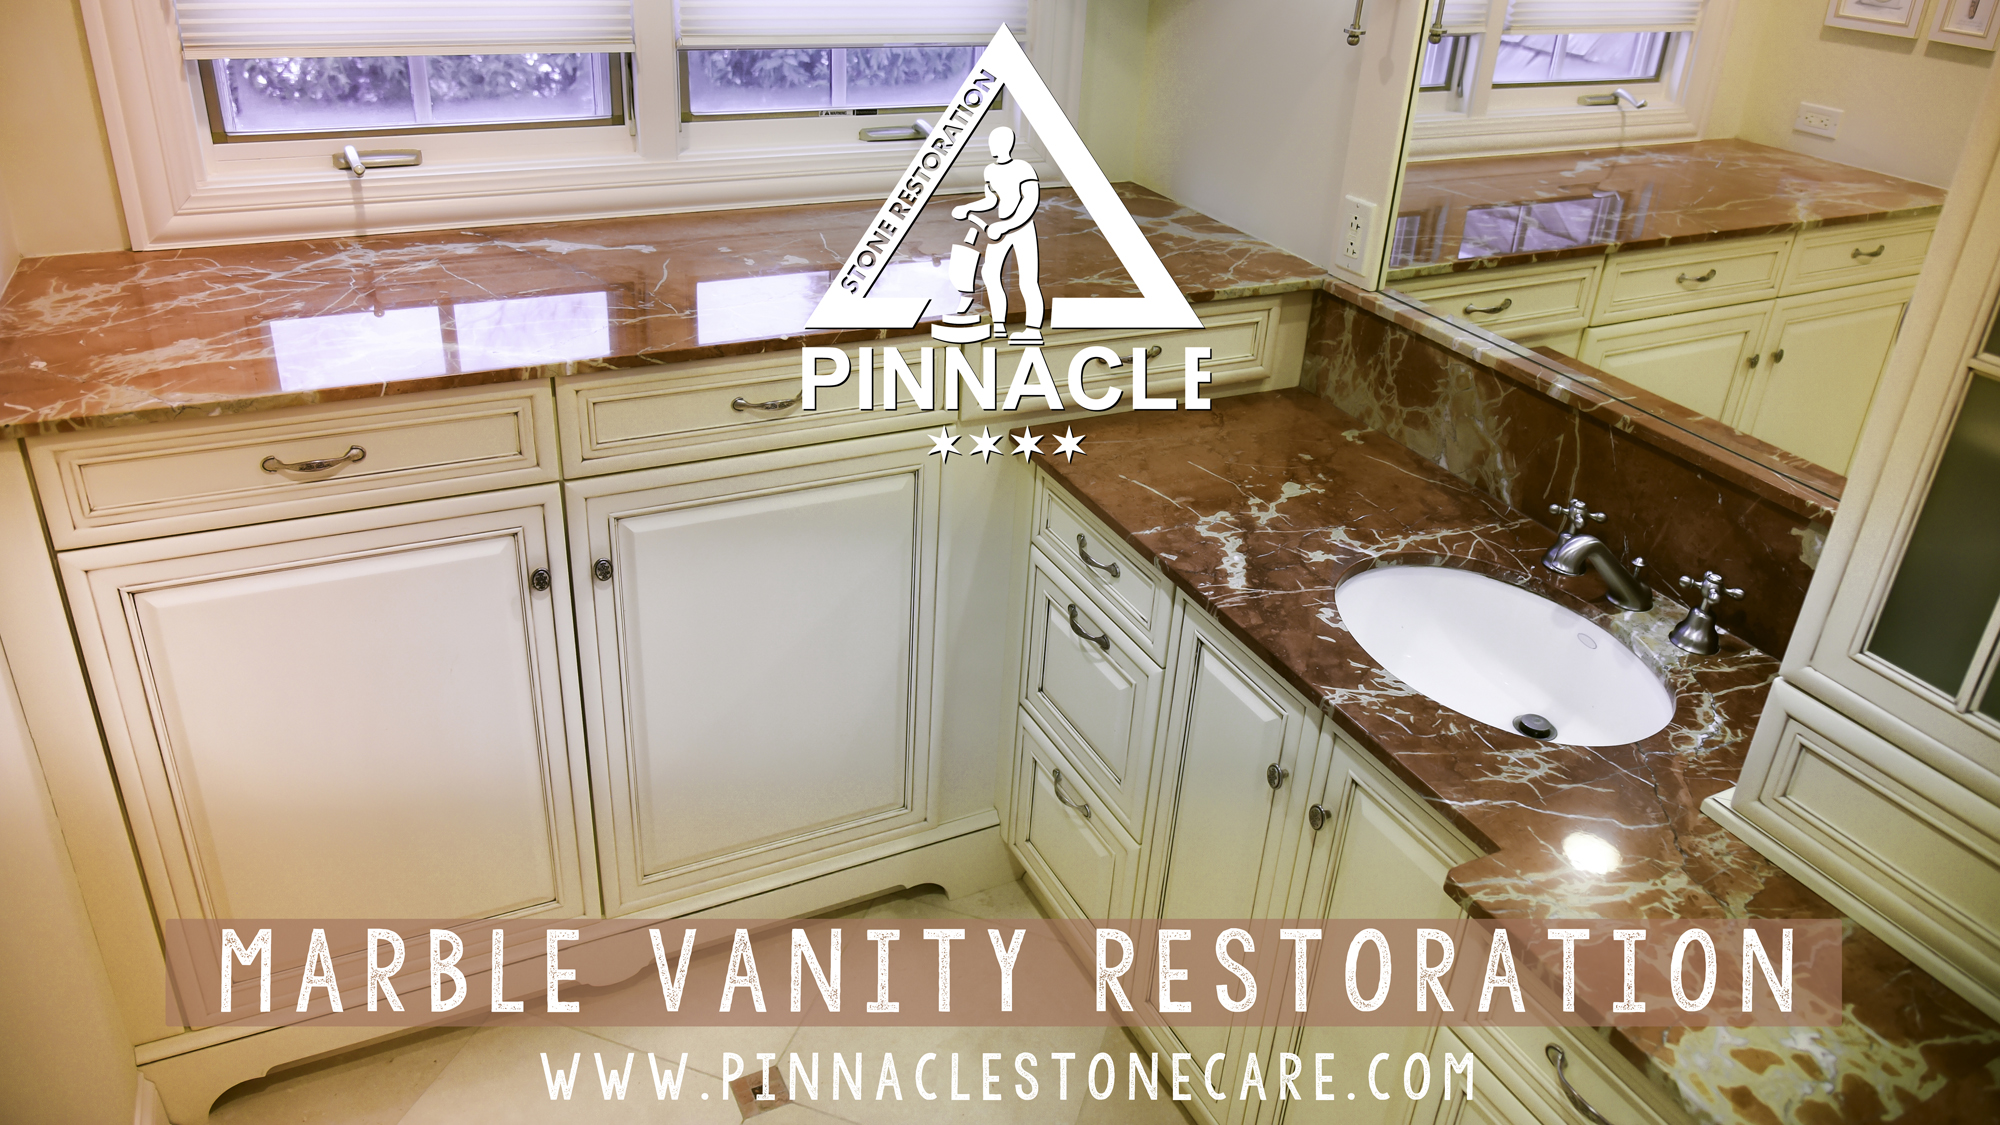 Marble vanity top restoration and polishing by Pinnacle Stone Restoration